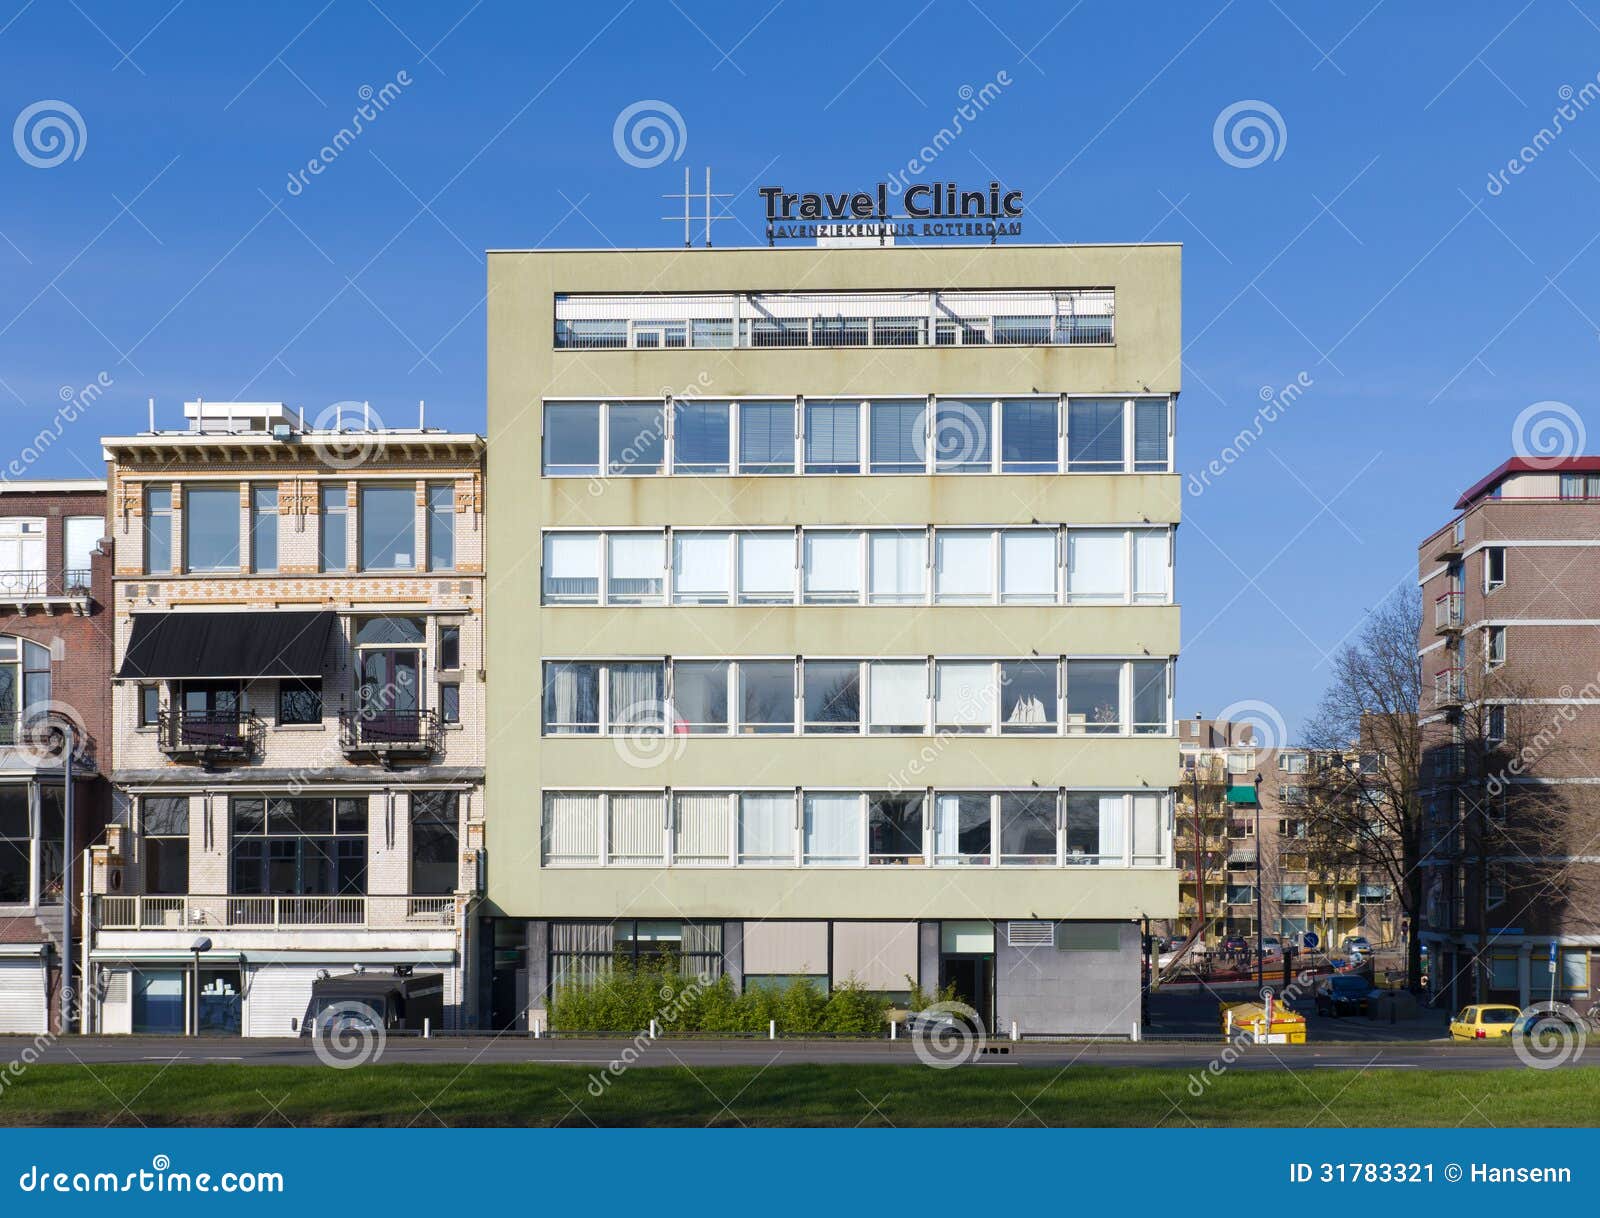 corporate travel clinic rotterdam